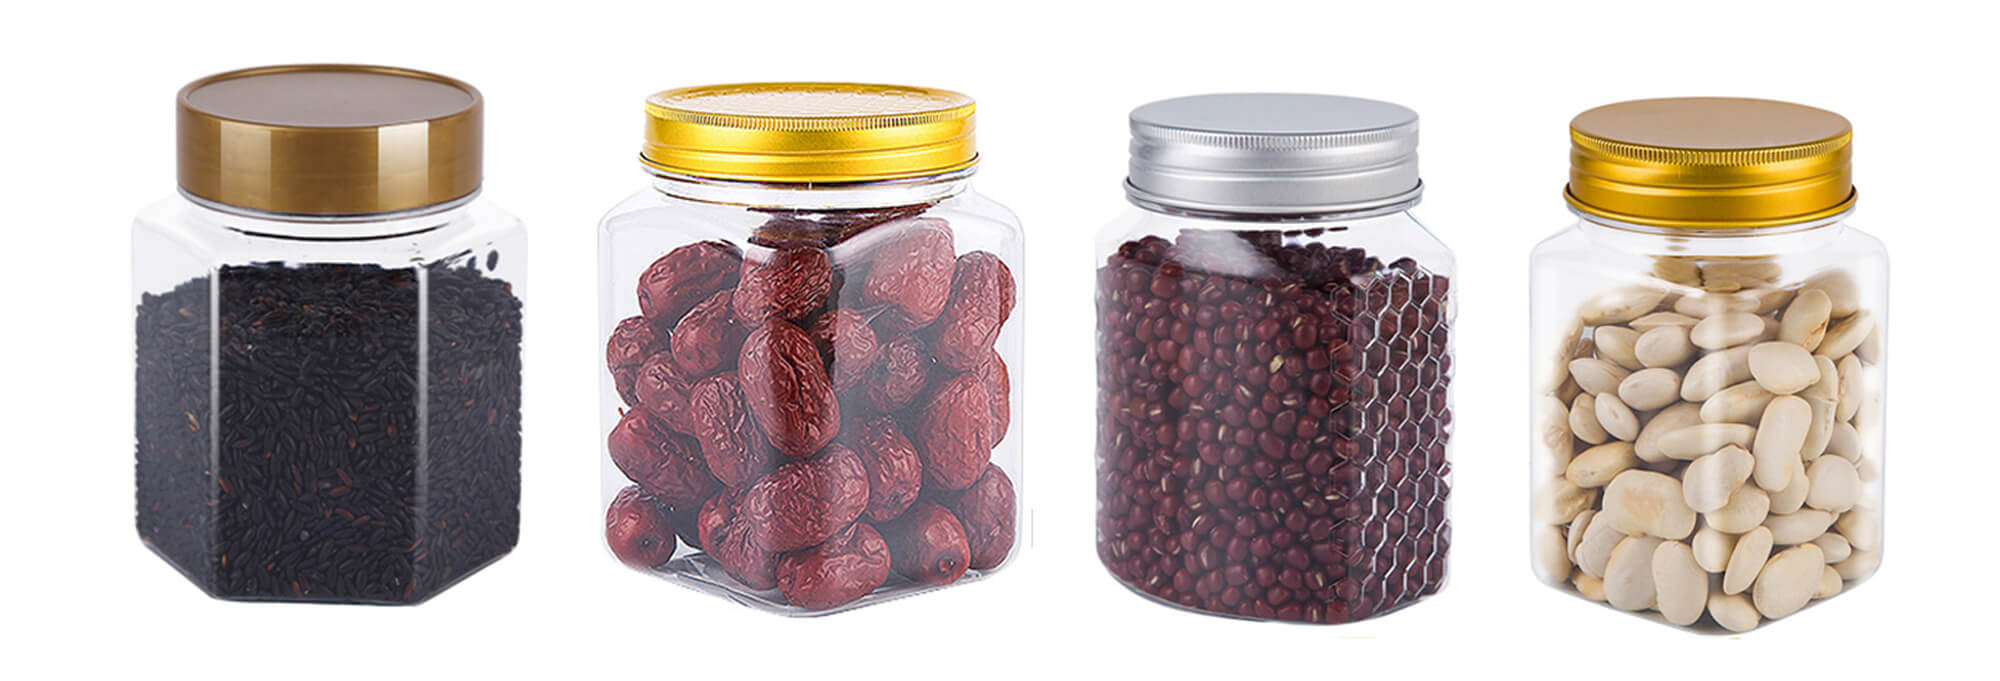 Food Packaging Jar molding equipment manufacturer China